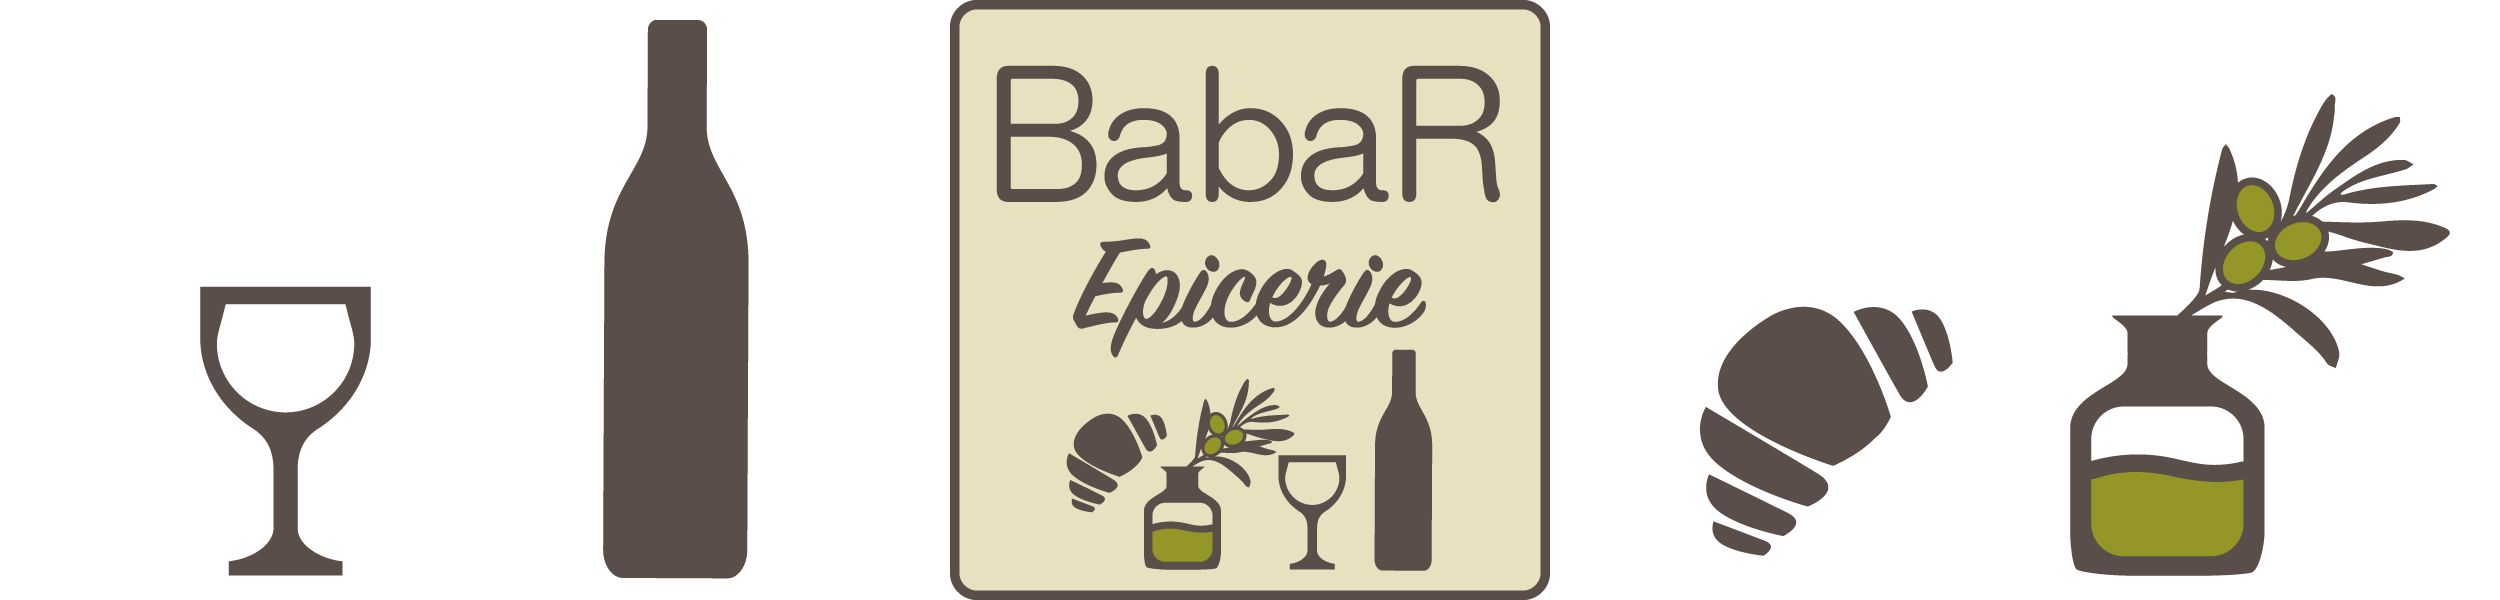 Epicerie BabaR - エピスリーババール